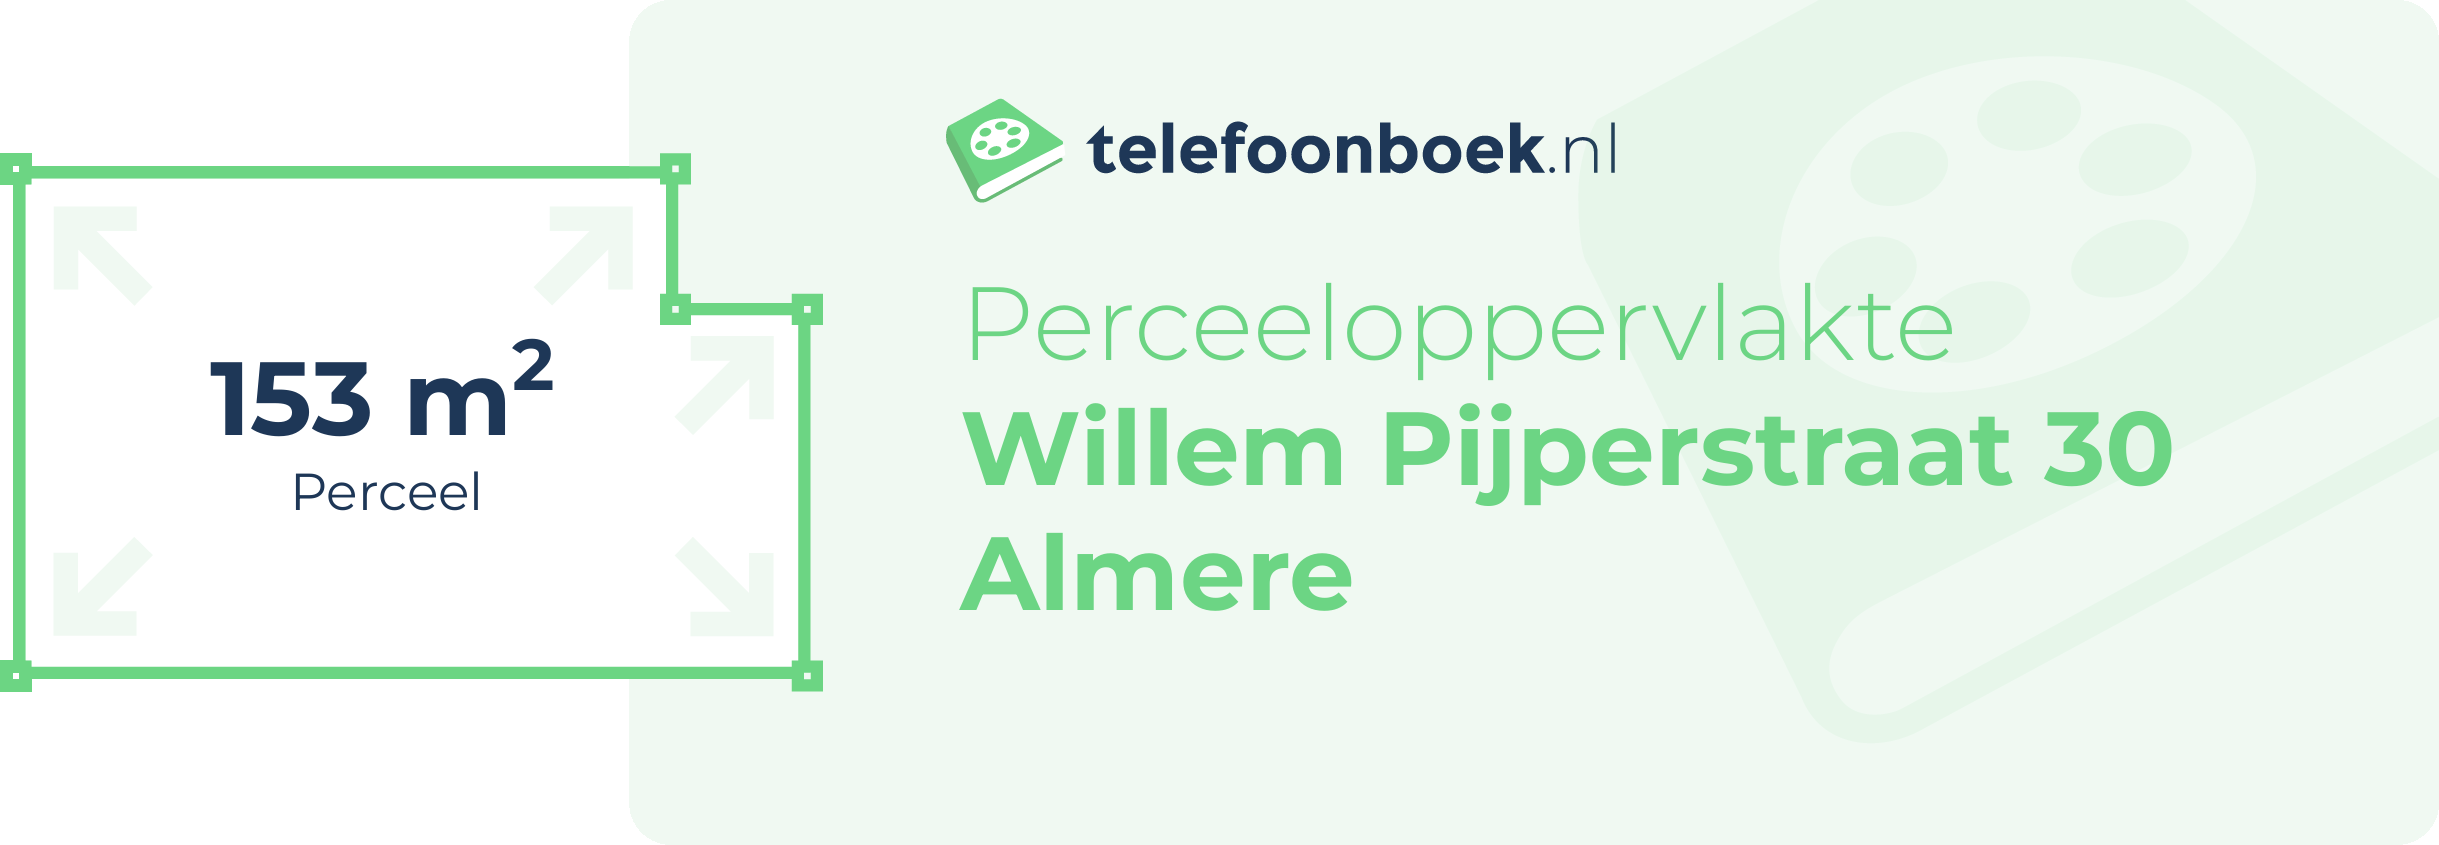 Perceeloppervlakte Willem Pijperstraat 30 Almere